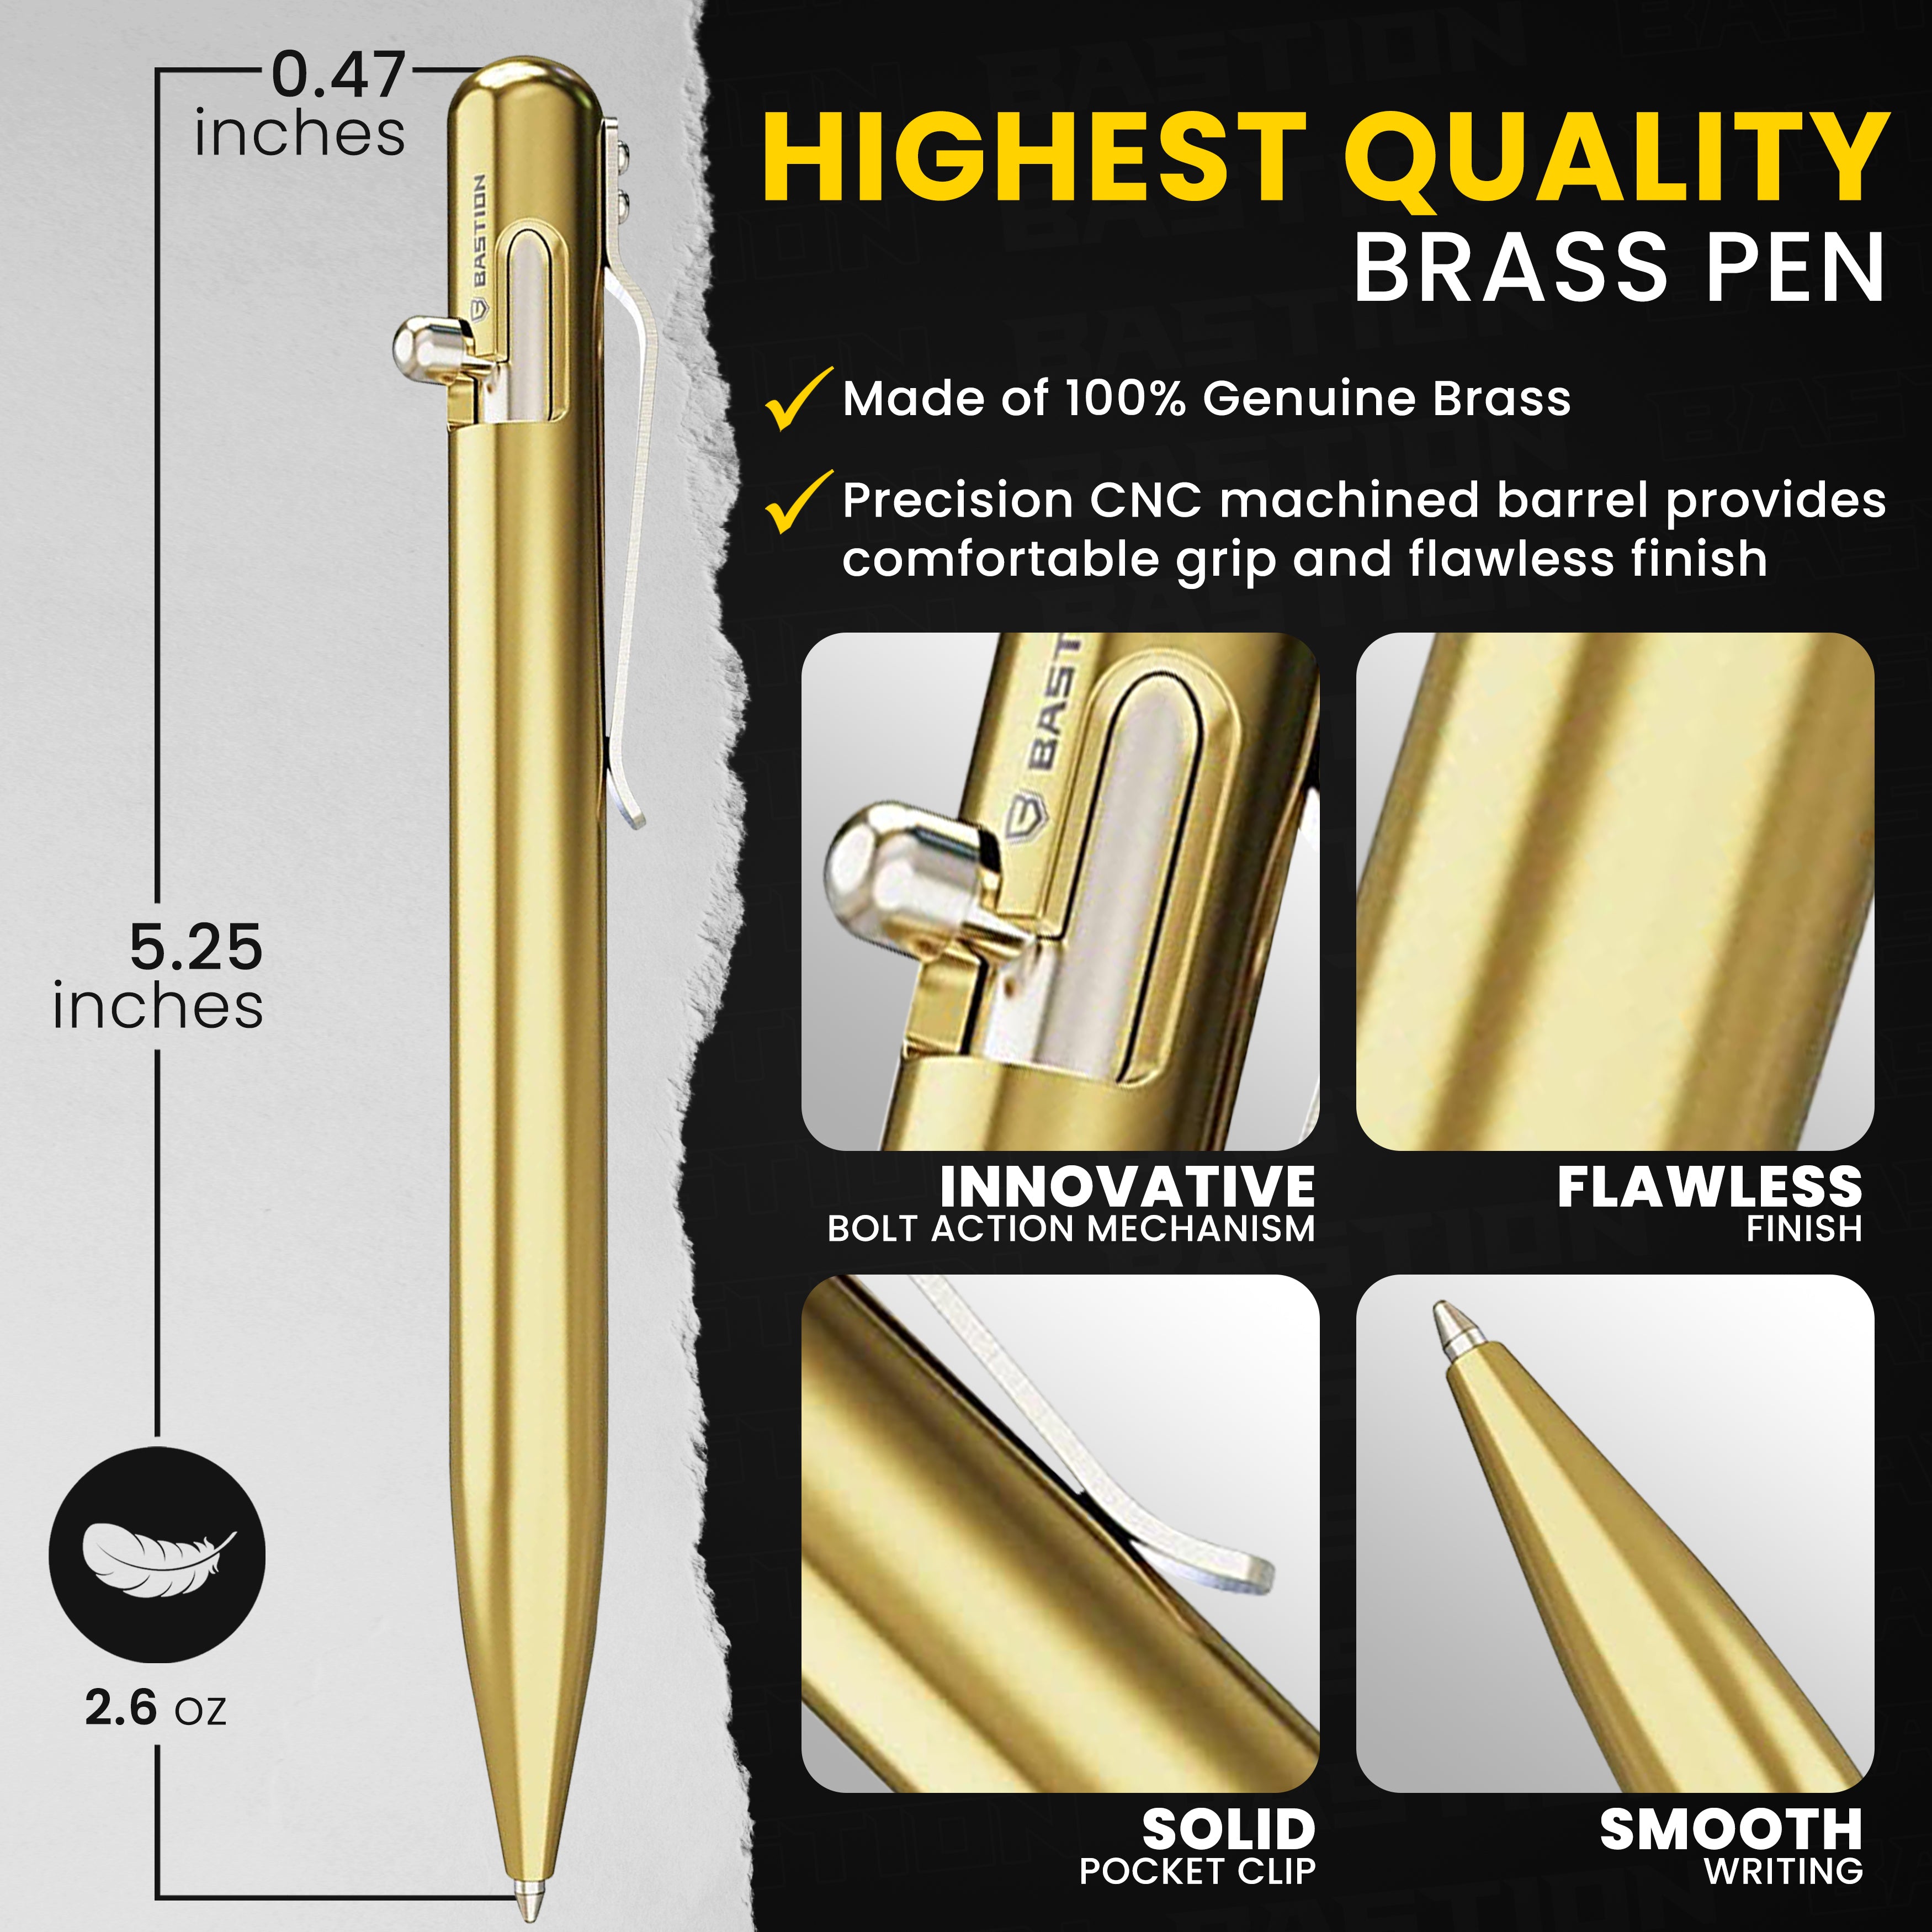 Kraken's Keepsake Brass Patina - Bolt Action Pen by Bastion® - Bastion Bolt Action Pen